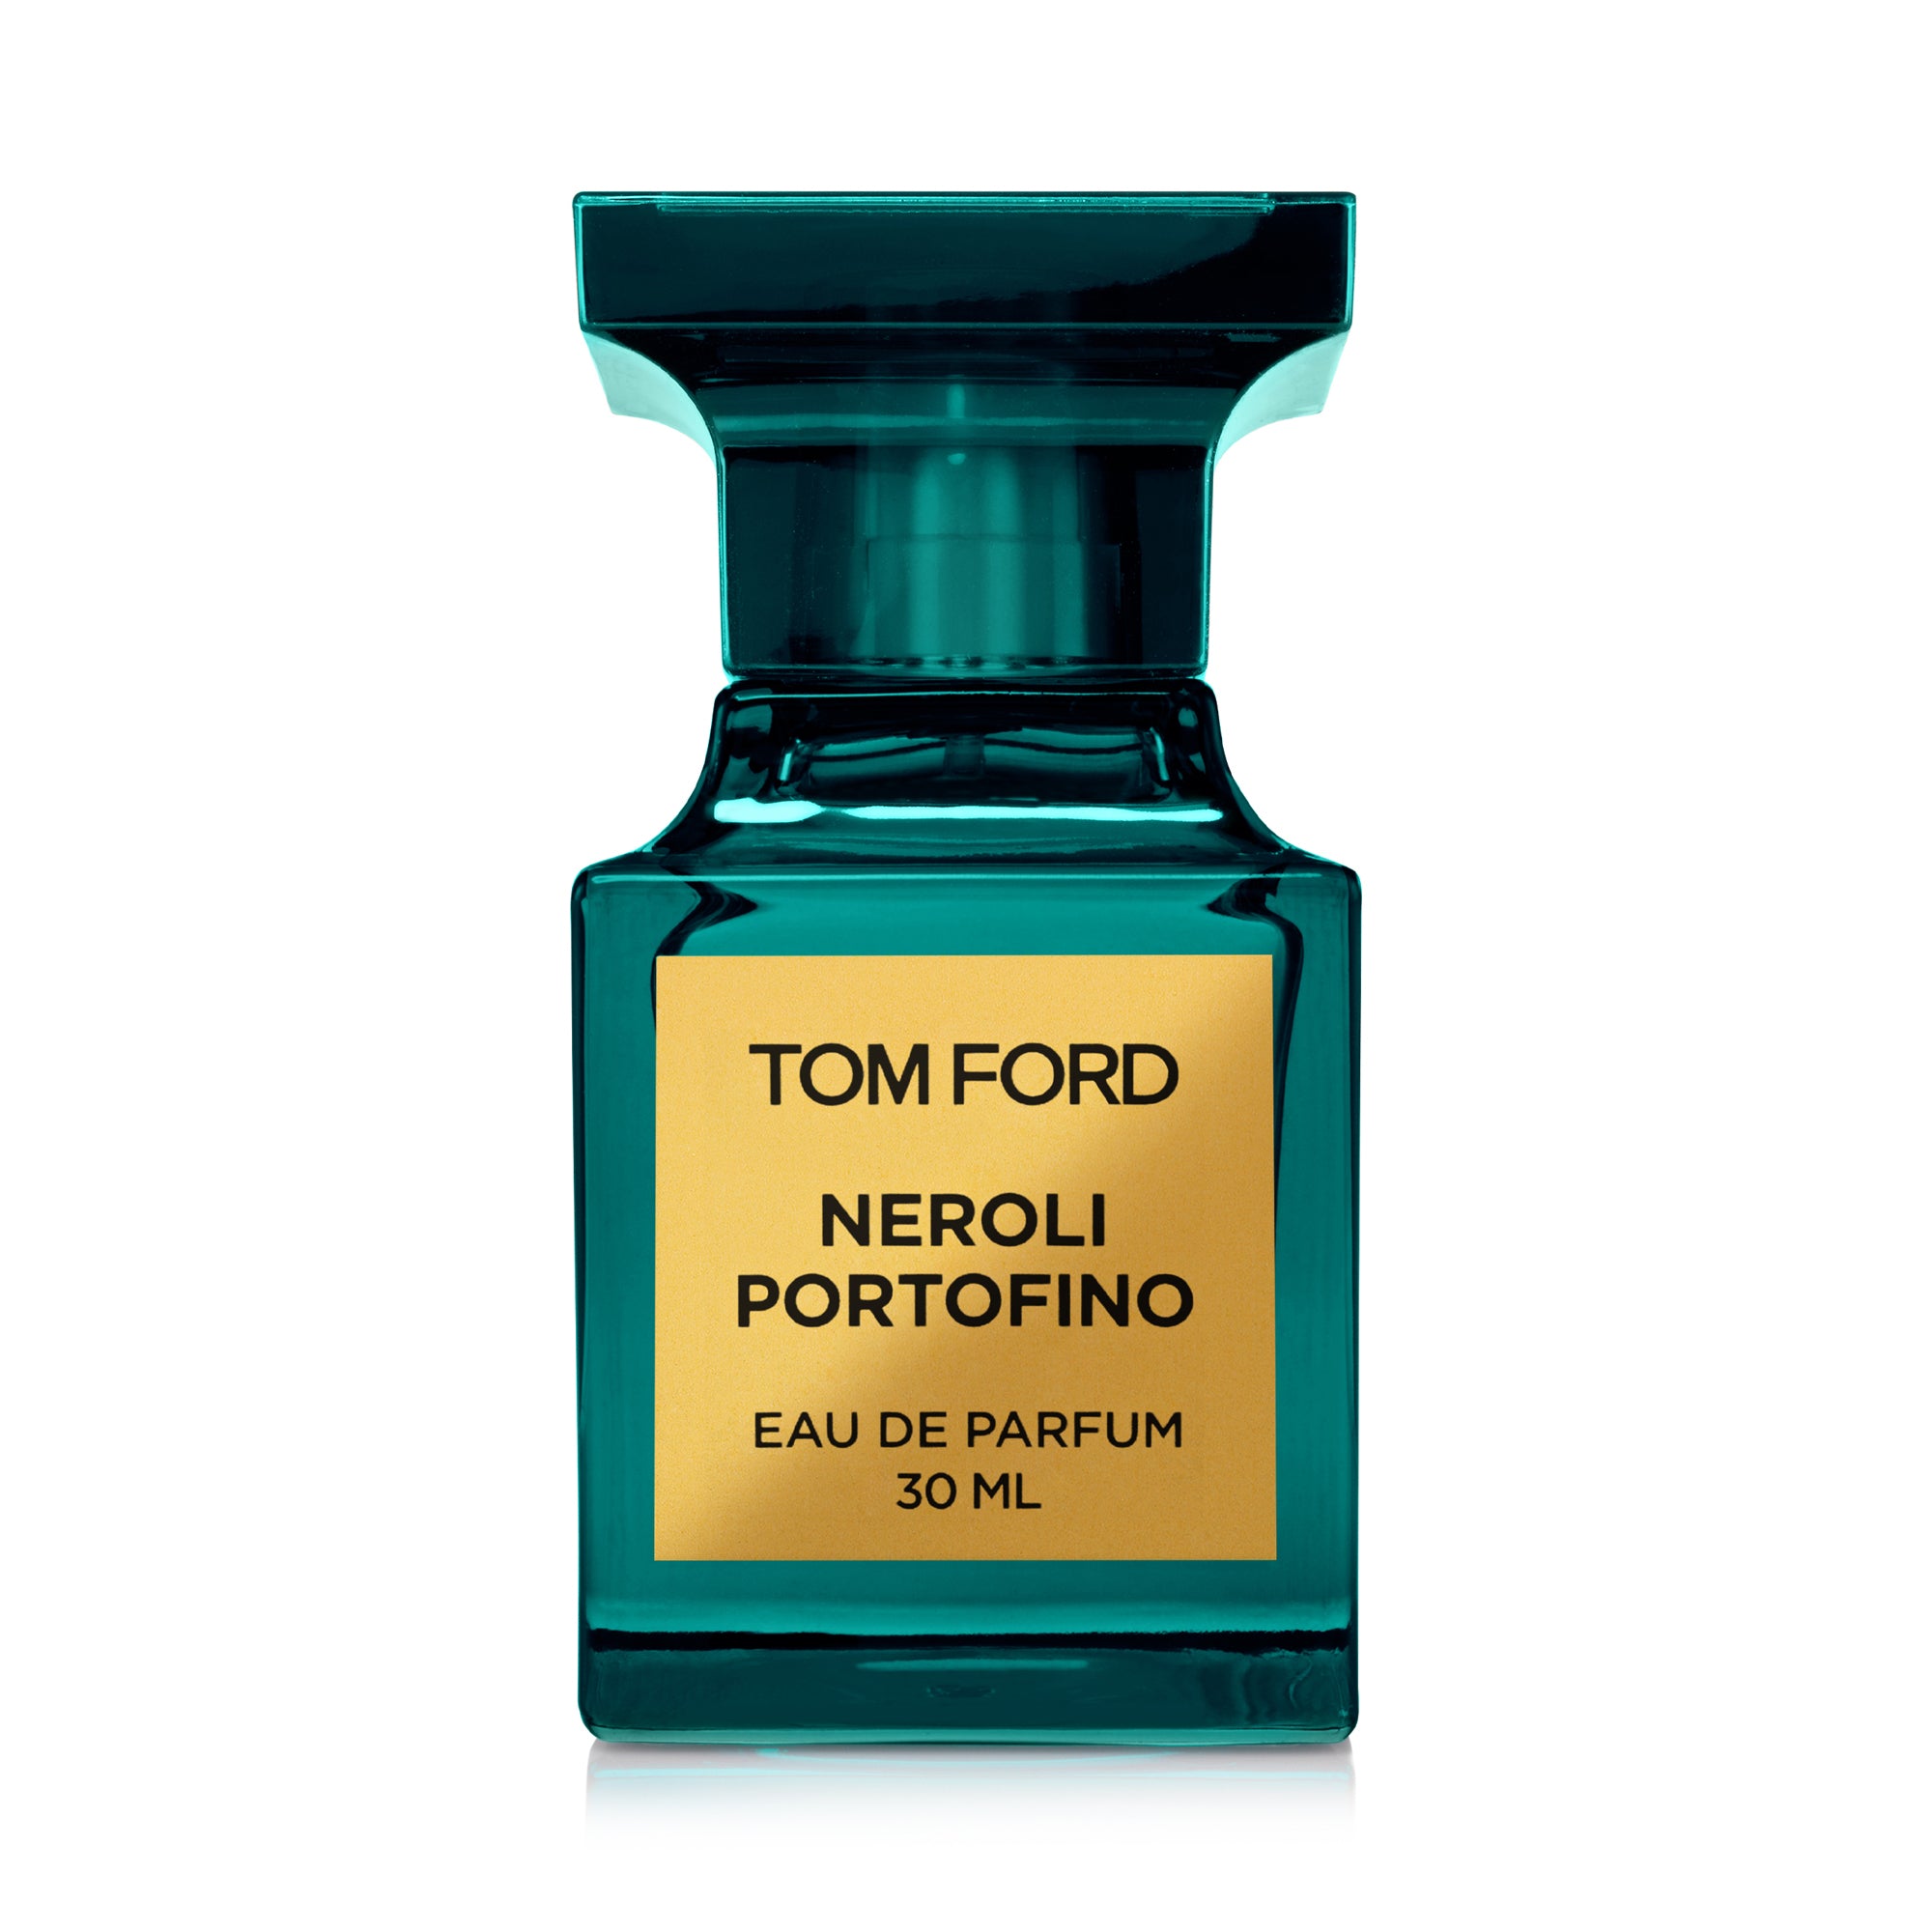 Tom Ford Neroli Portofino 30ml Eau de Parfum